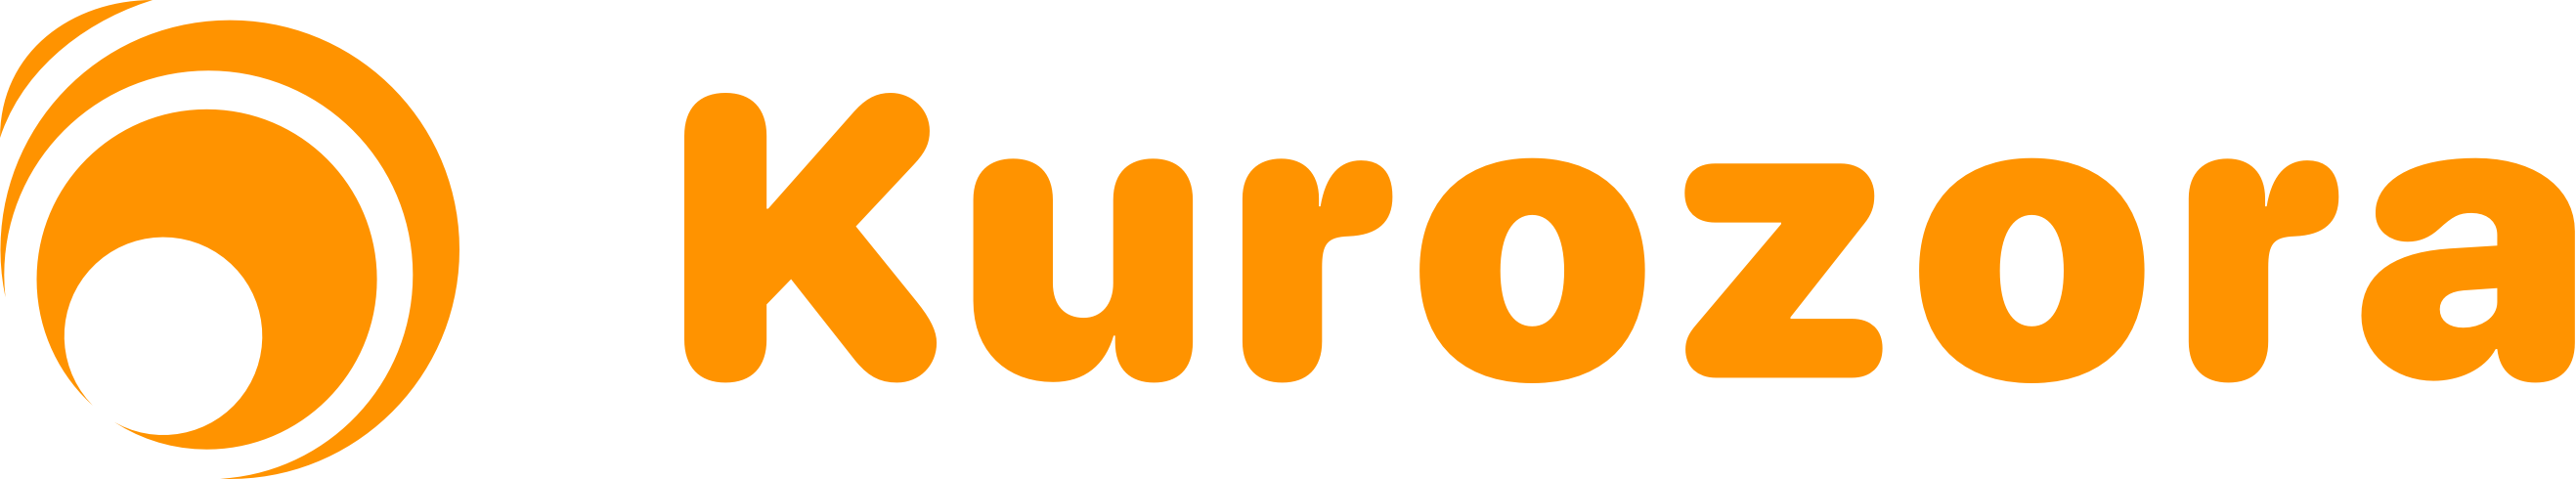 Kurozora full logo orange RGB monochrome